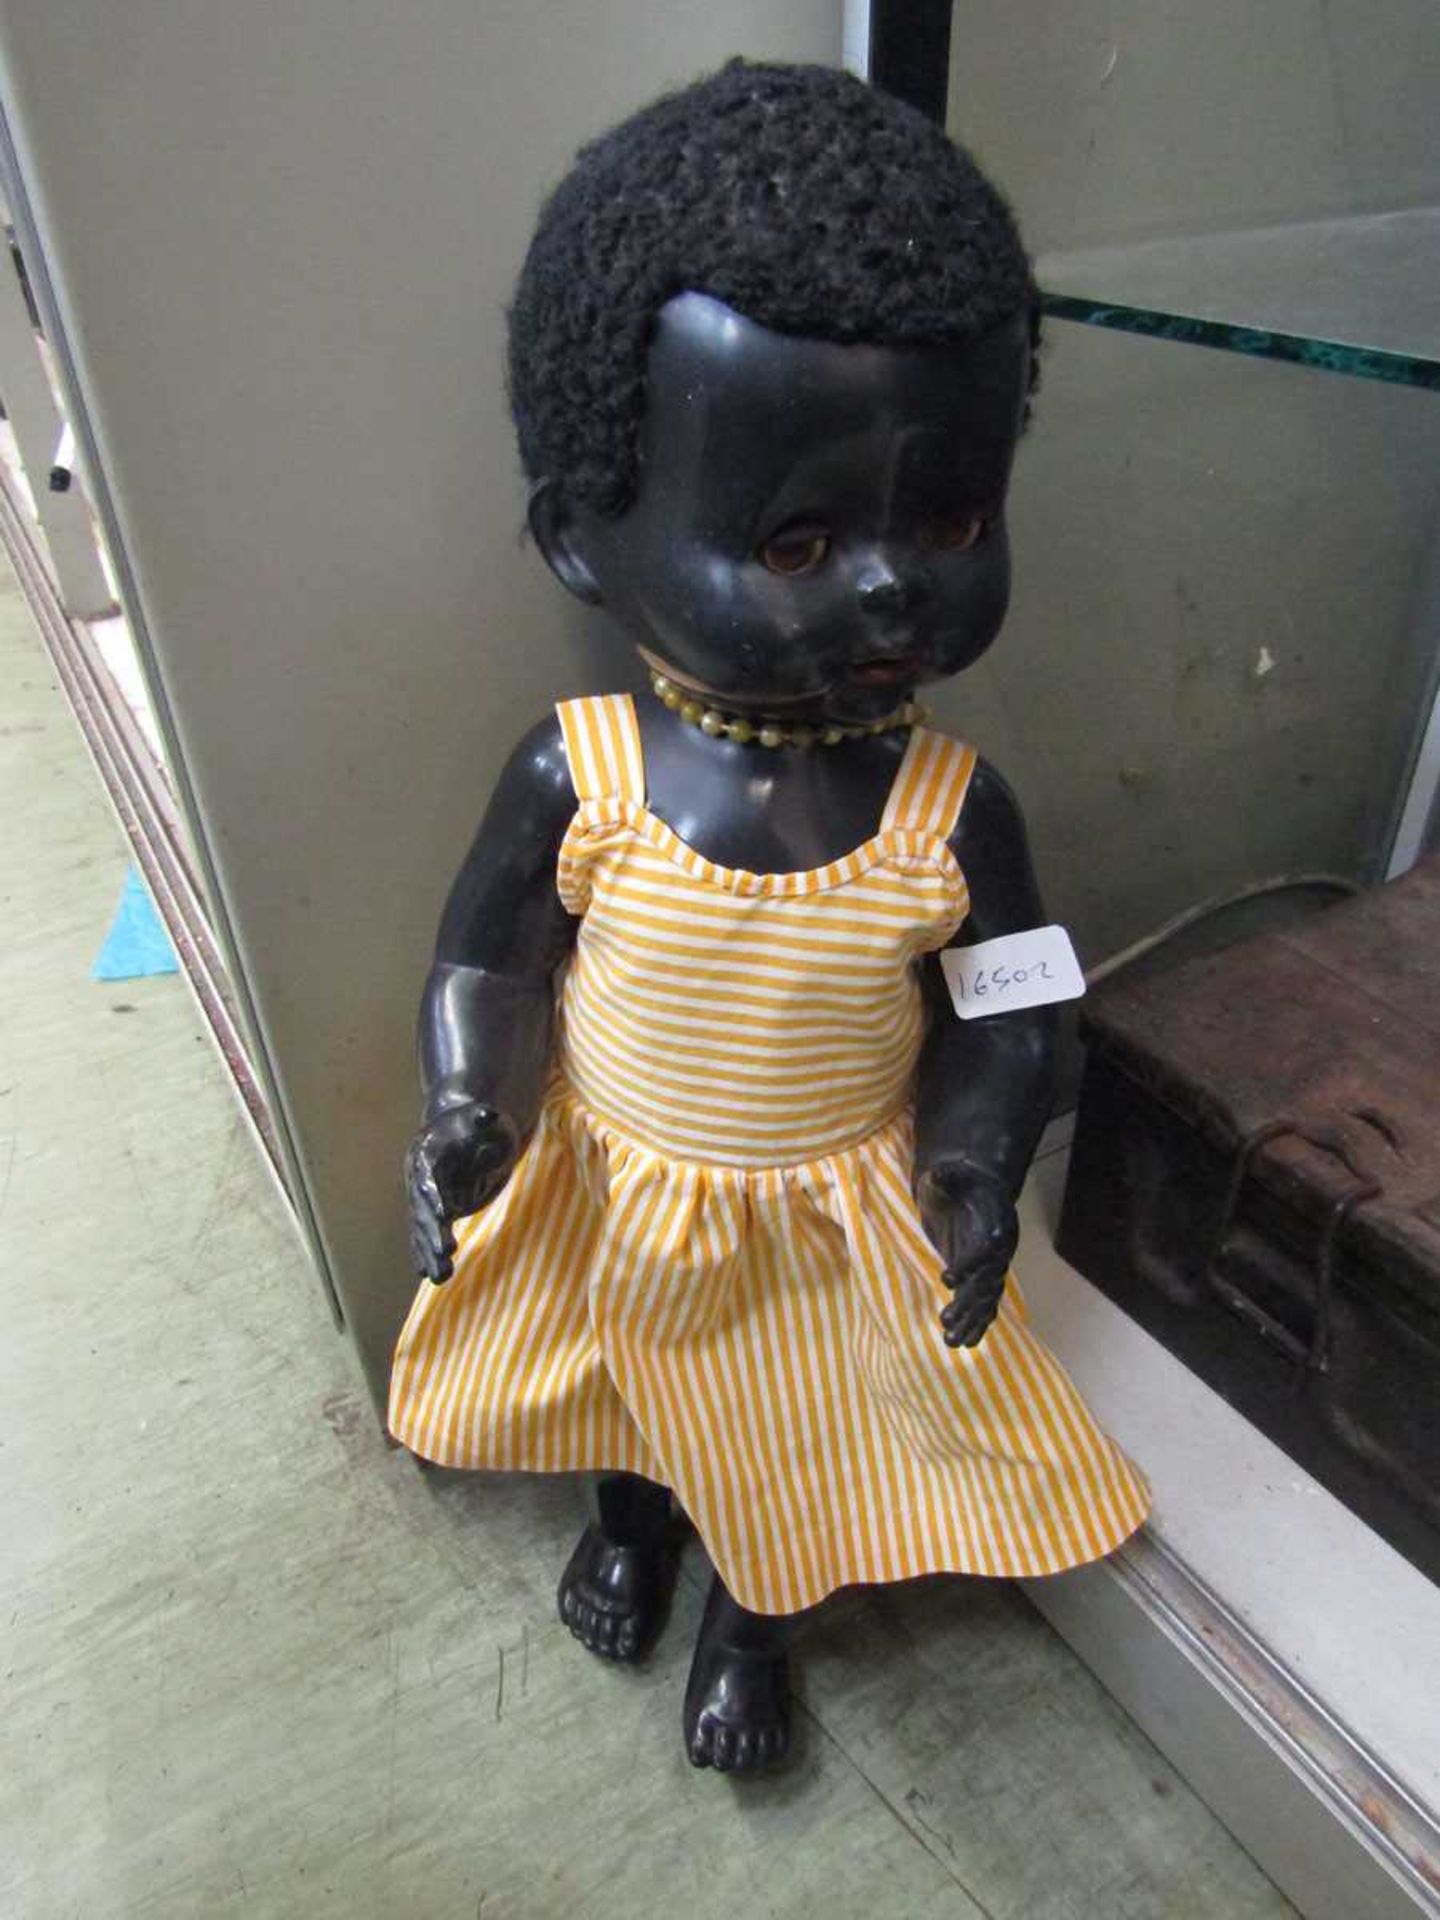 A mid-20th century doll